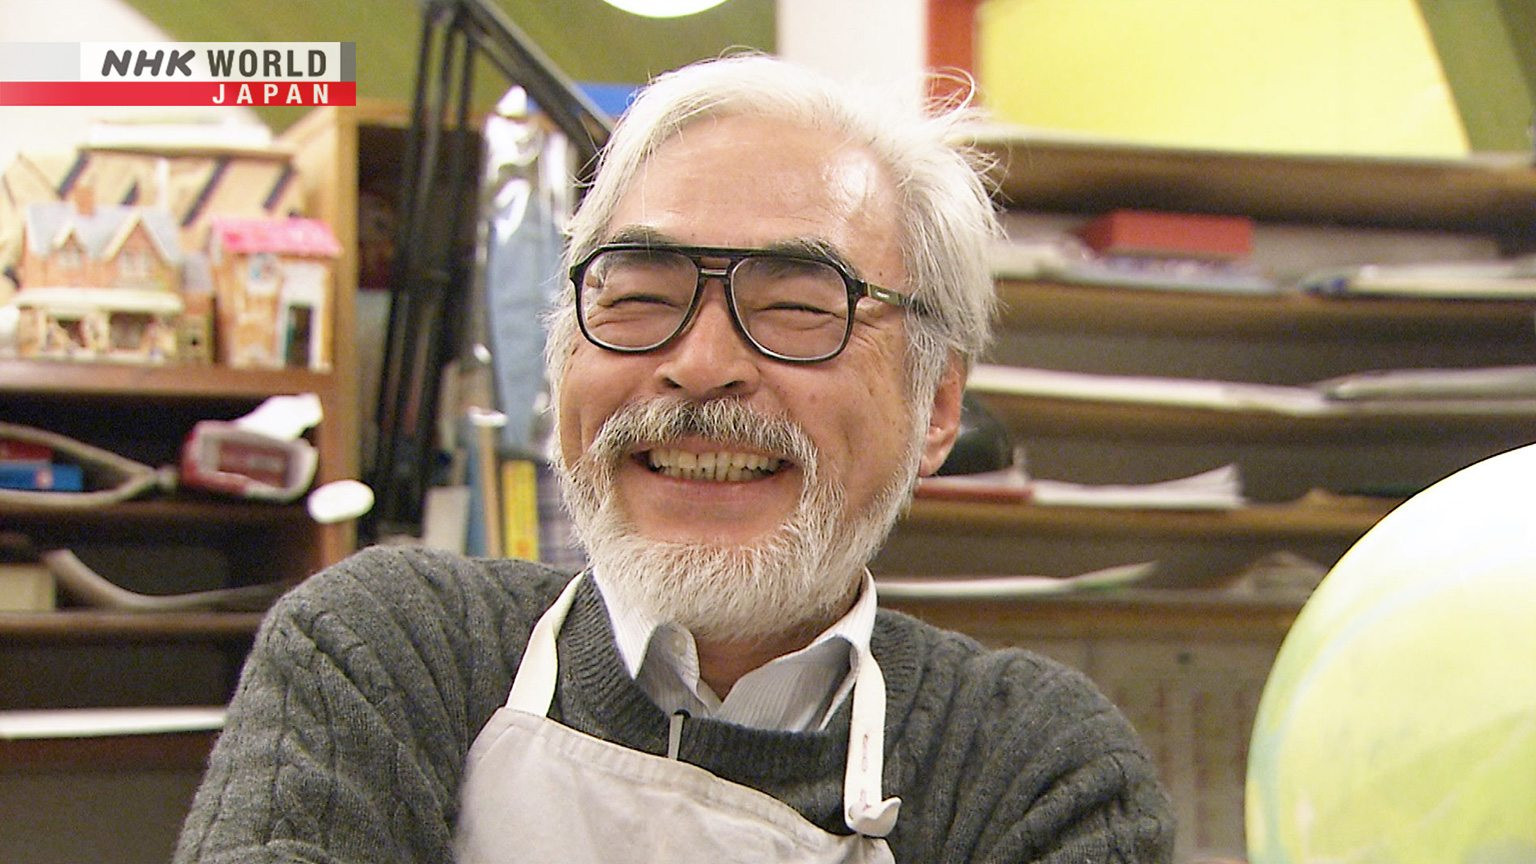 Ep. 2 Drawing What's Real - 10 Years with Hayao Miyazaki